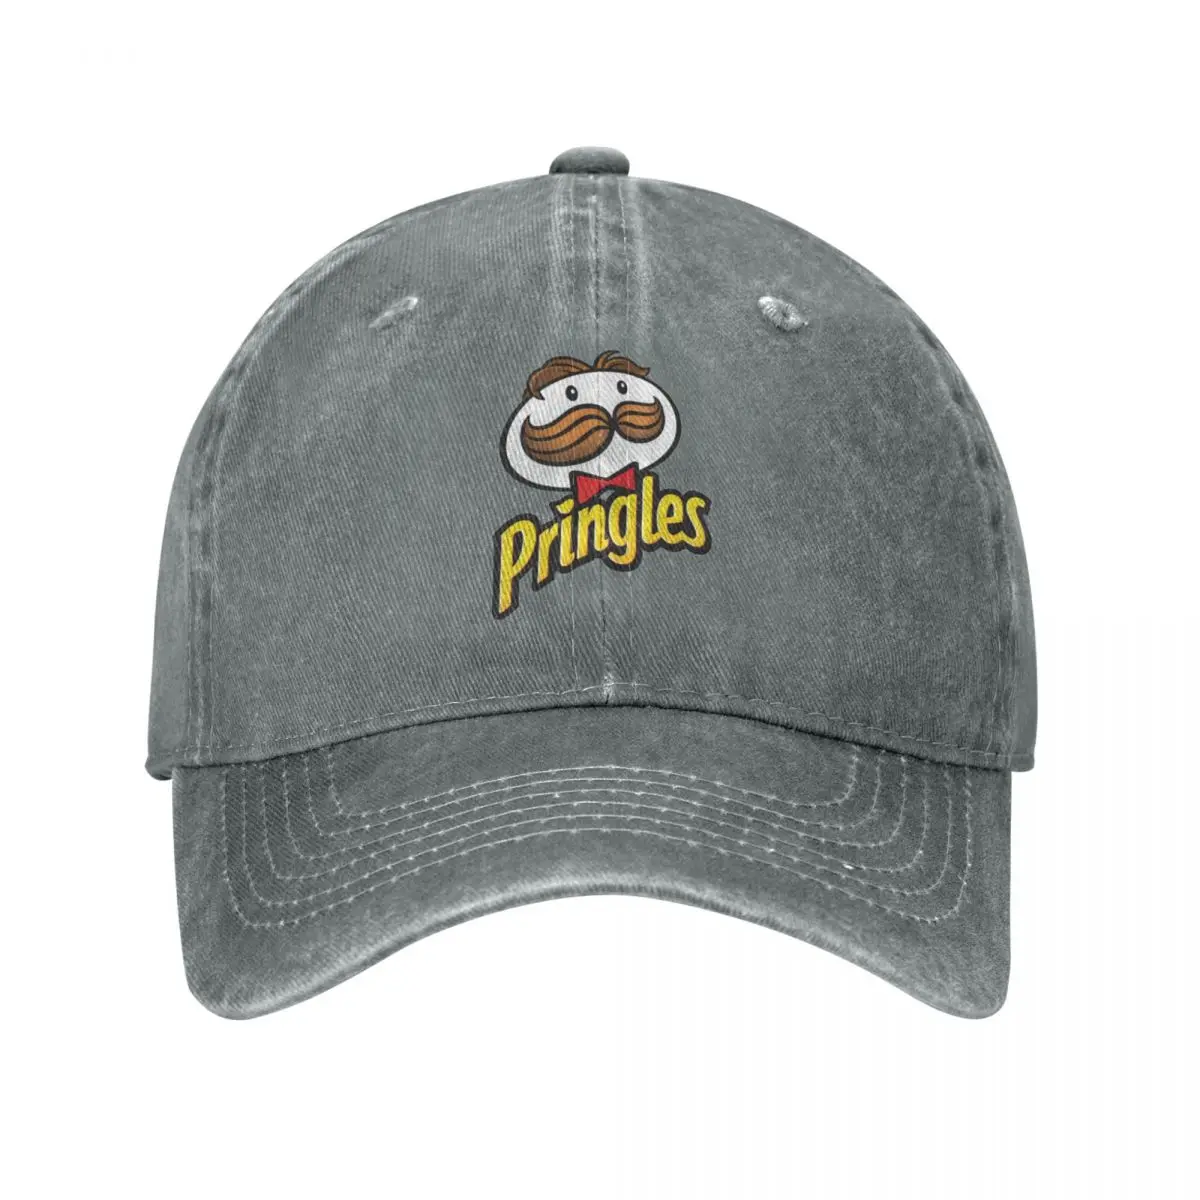 

Potato Crisps Chips Merch Men Women Baseball Caps Potato-Based Crisp Chip Snack Food Distressed Caps Adjustable Fit Snapback Hat